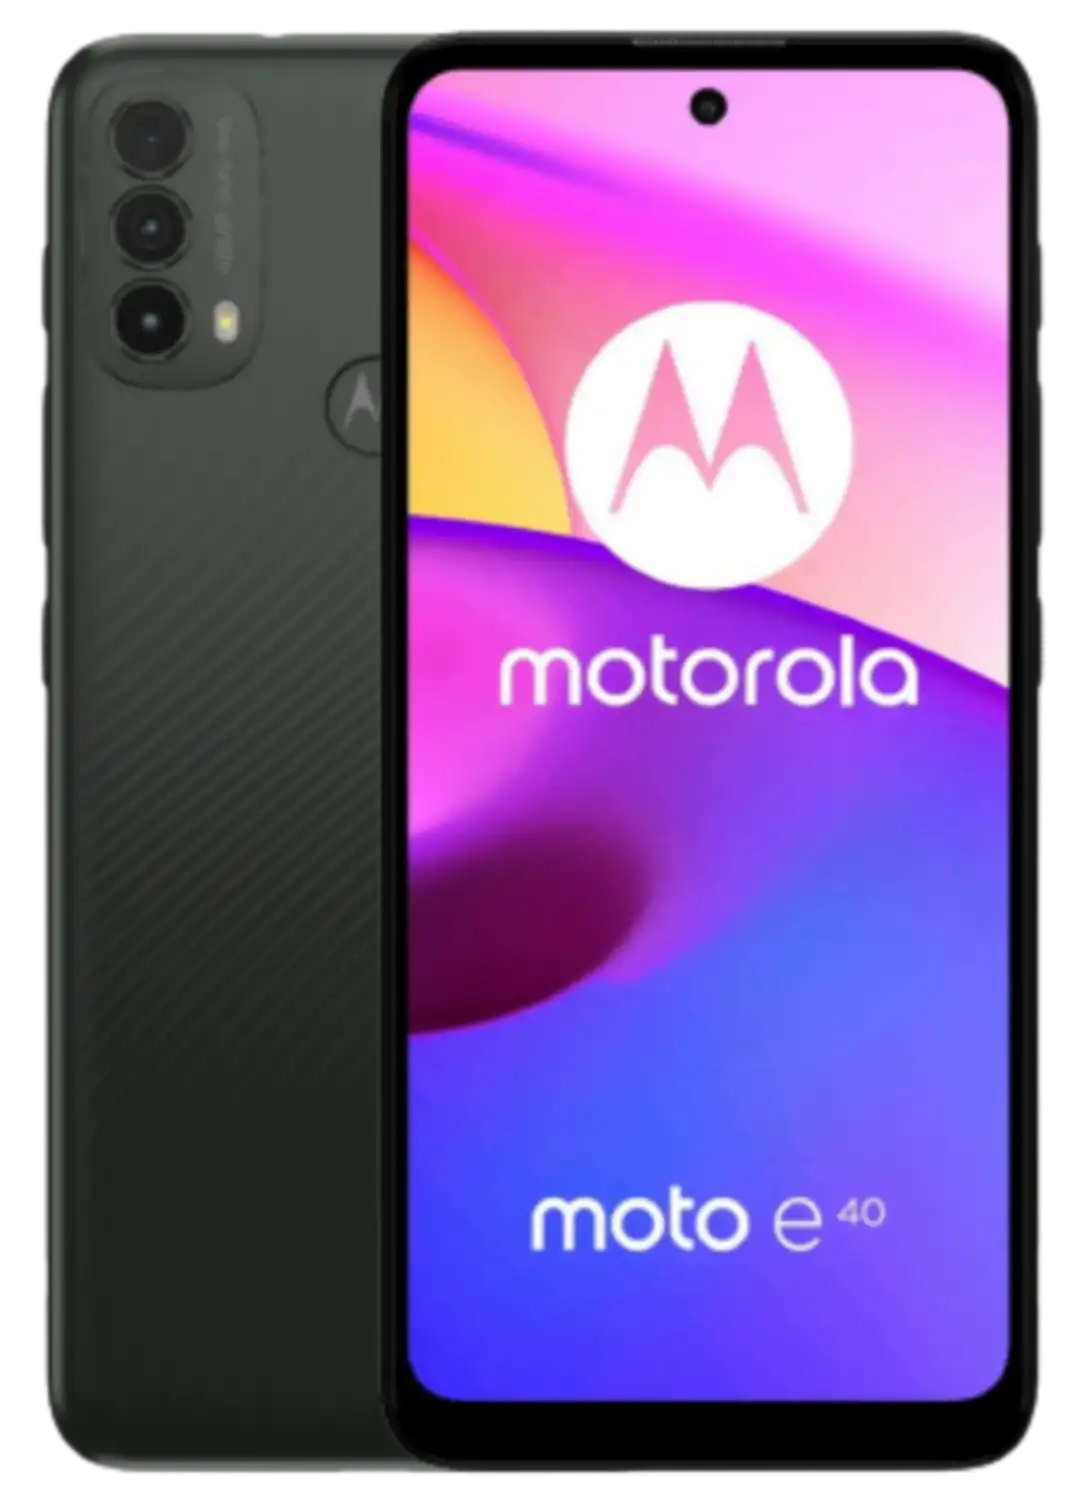 Motorola Moto E40 – Full Specifications